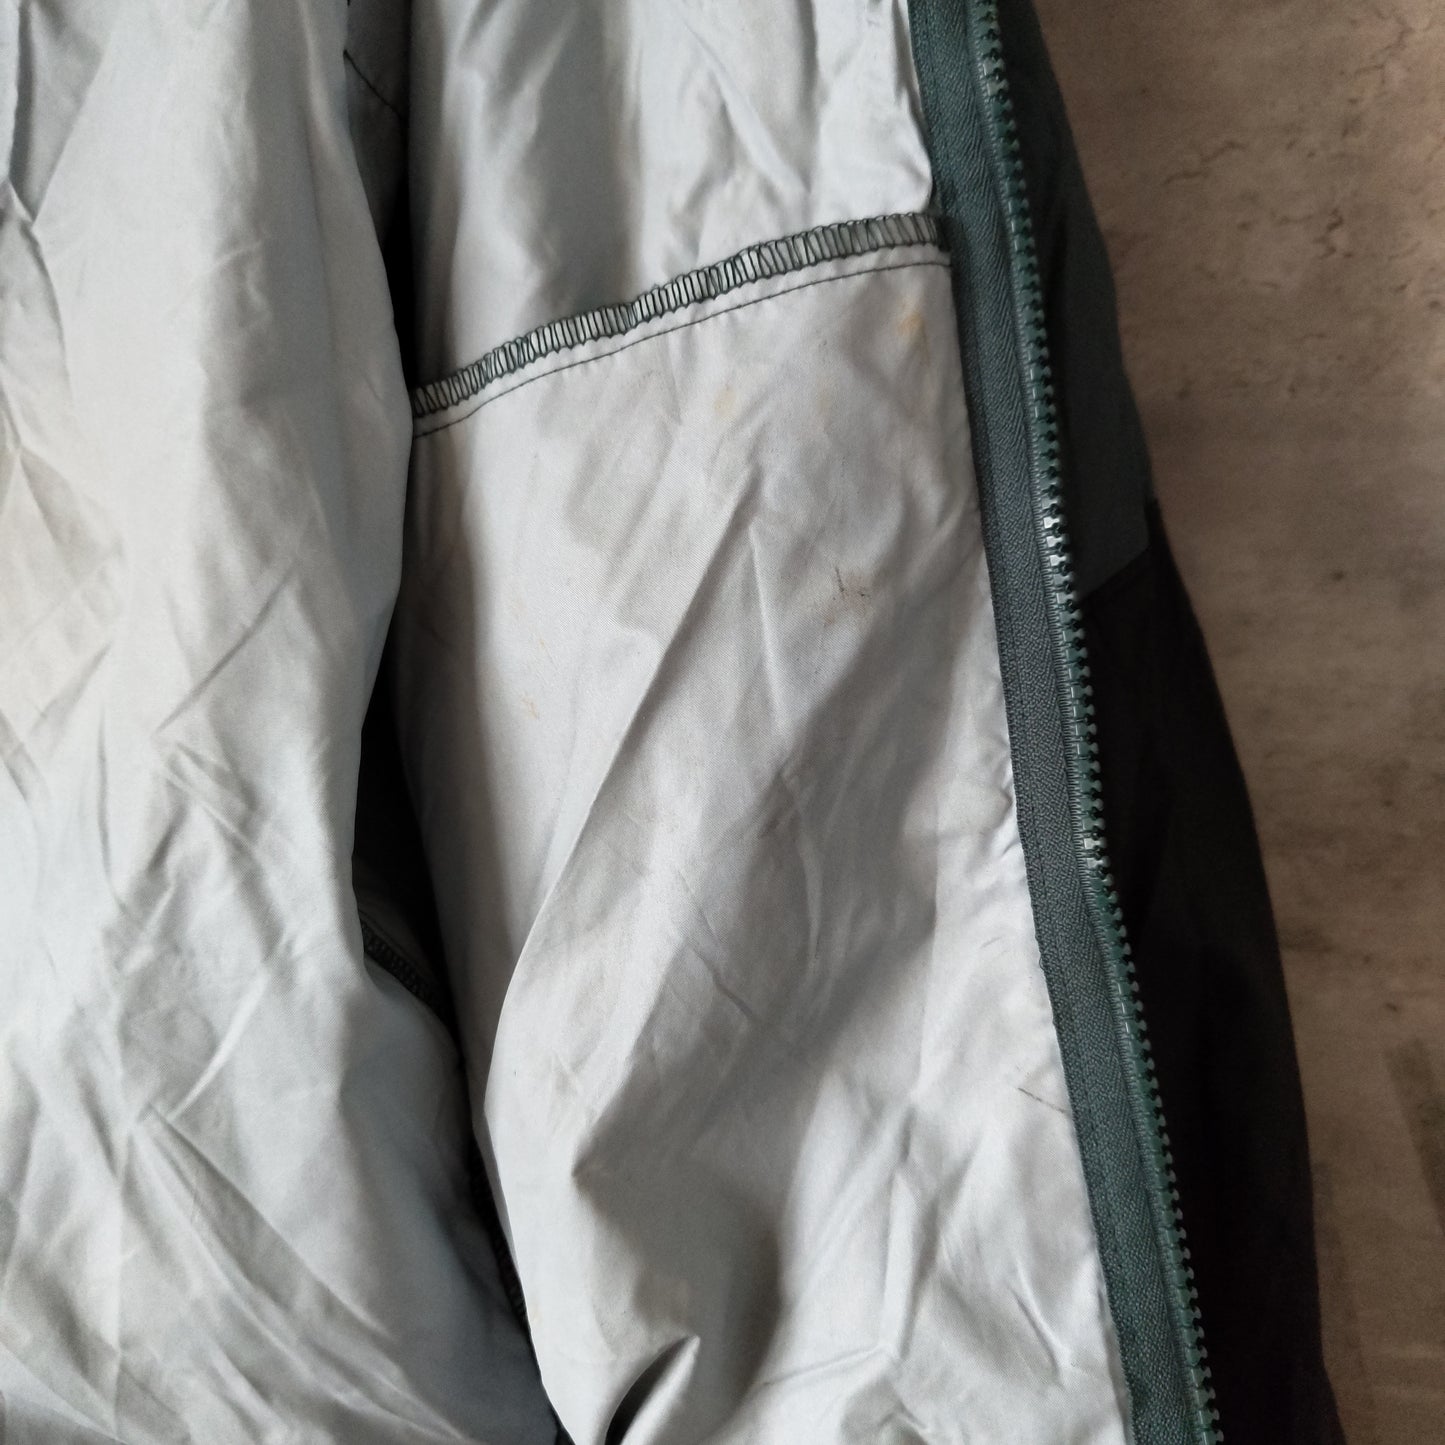 [Columbia] nylon jacket